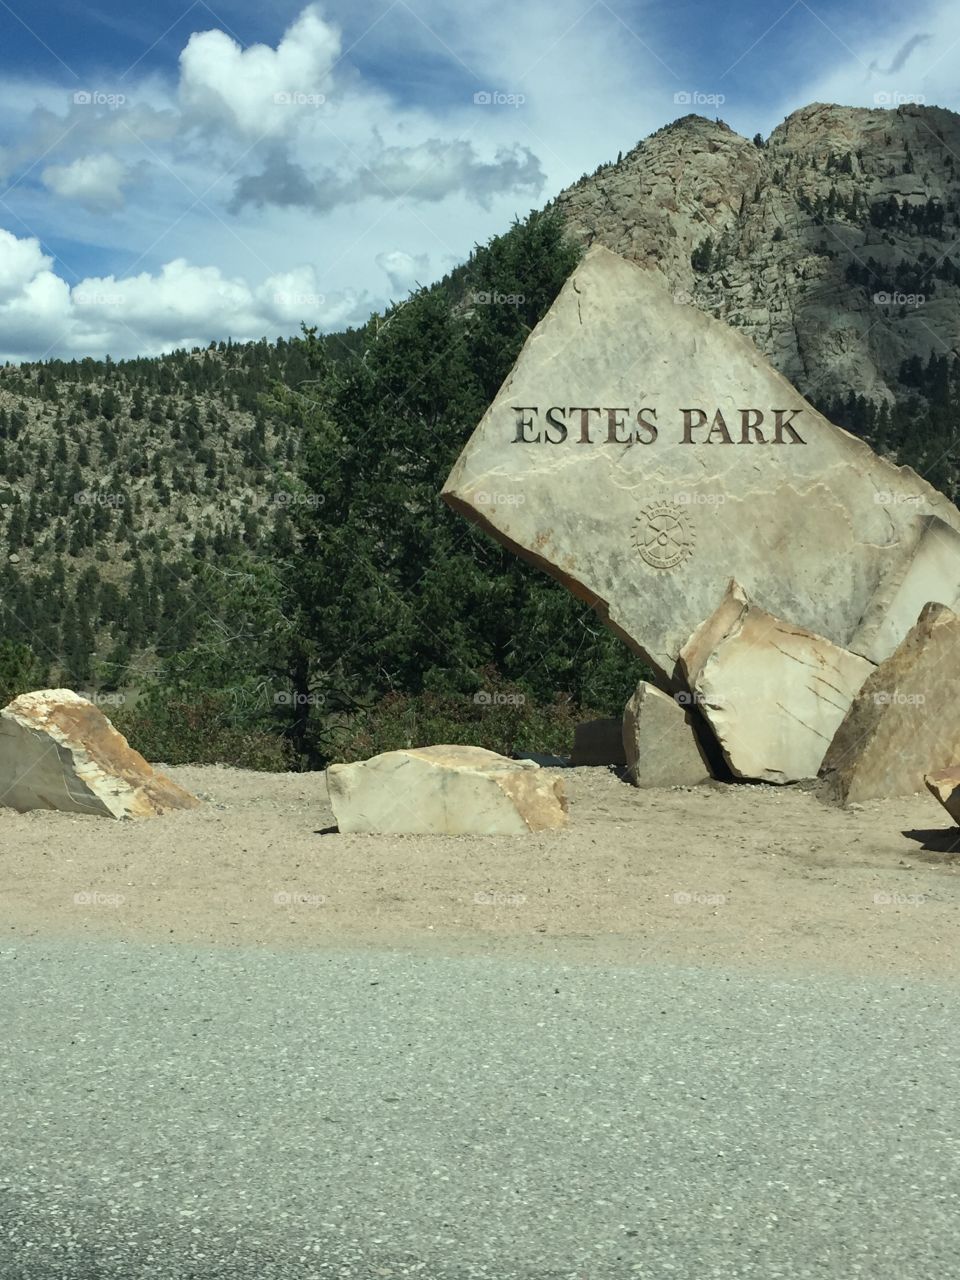 Estes Park Entrance